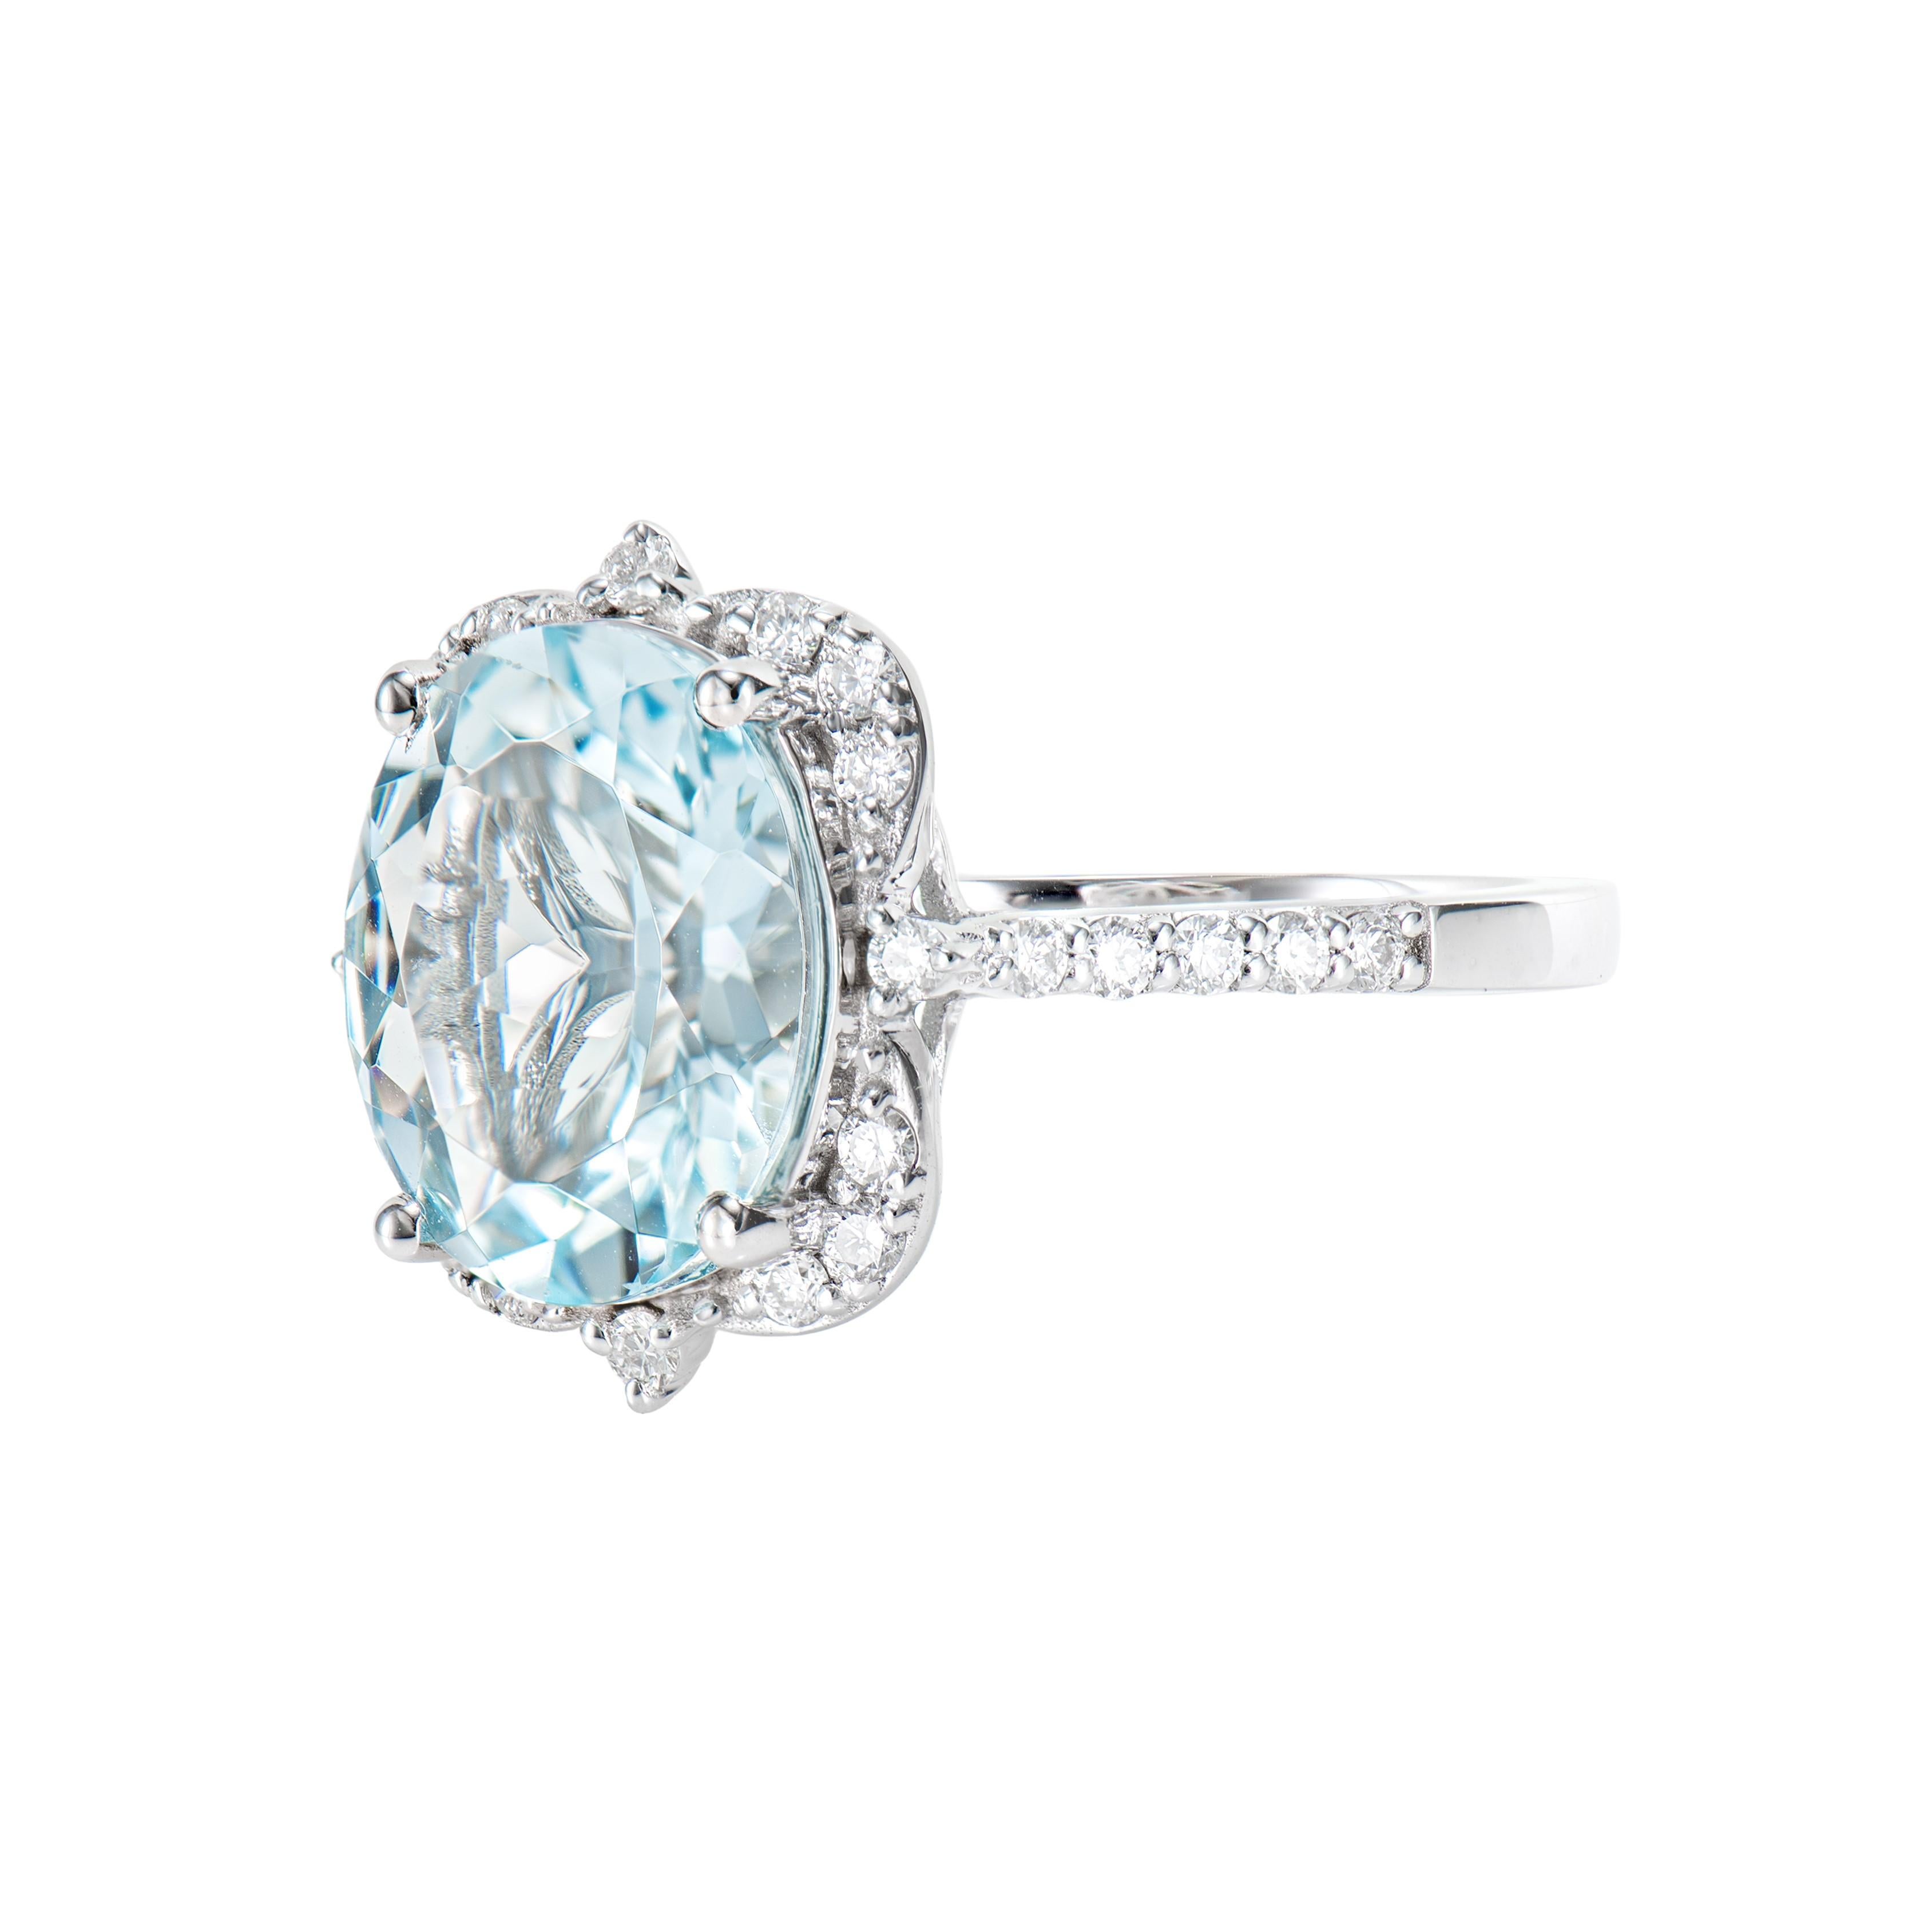 Oval Cut 3.73 Carat Aquamarine Elegant Ring in 18 Karat White Gold with White Diamond. For Sale